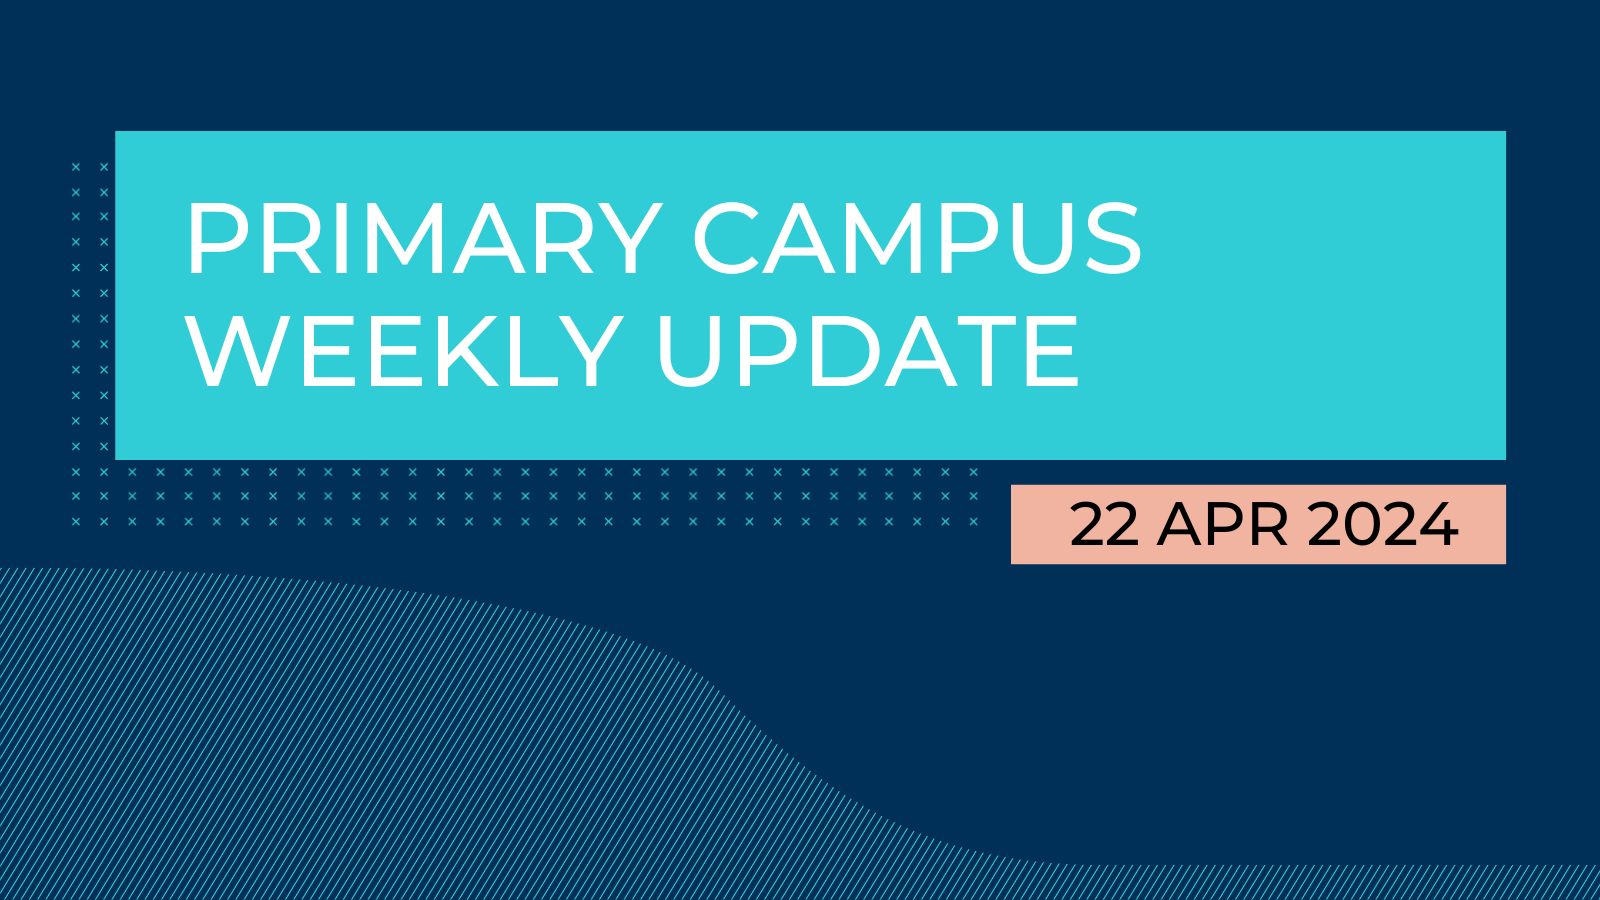 Primary Campus Weekly Update - Primary Campus Weekly Update